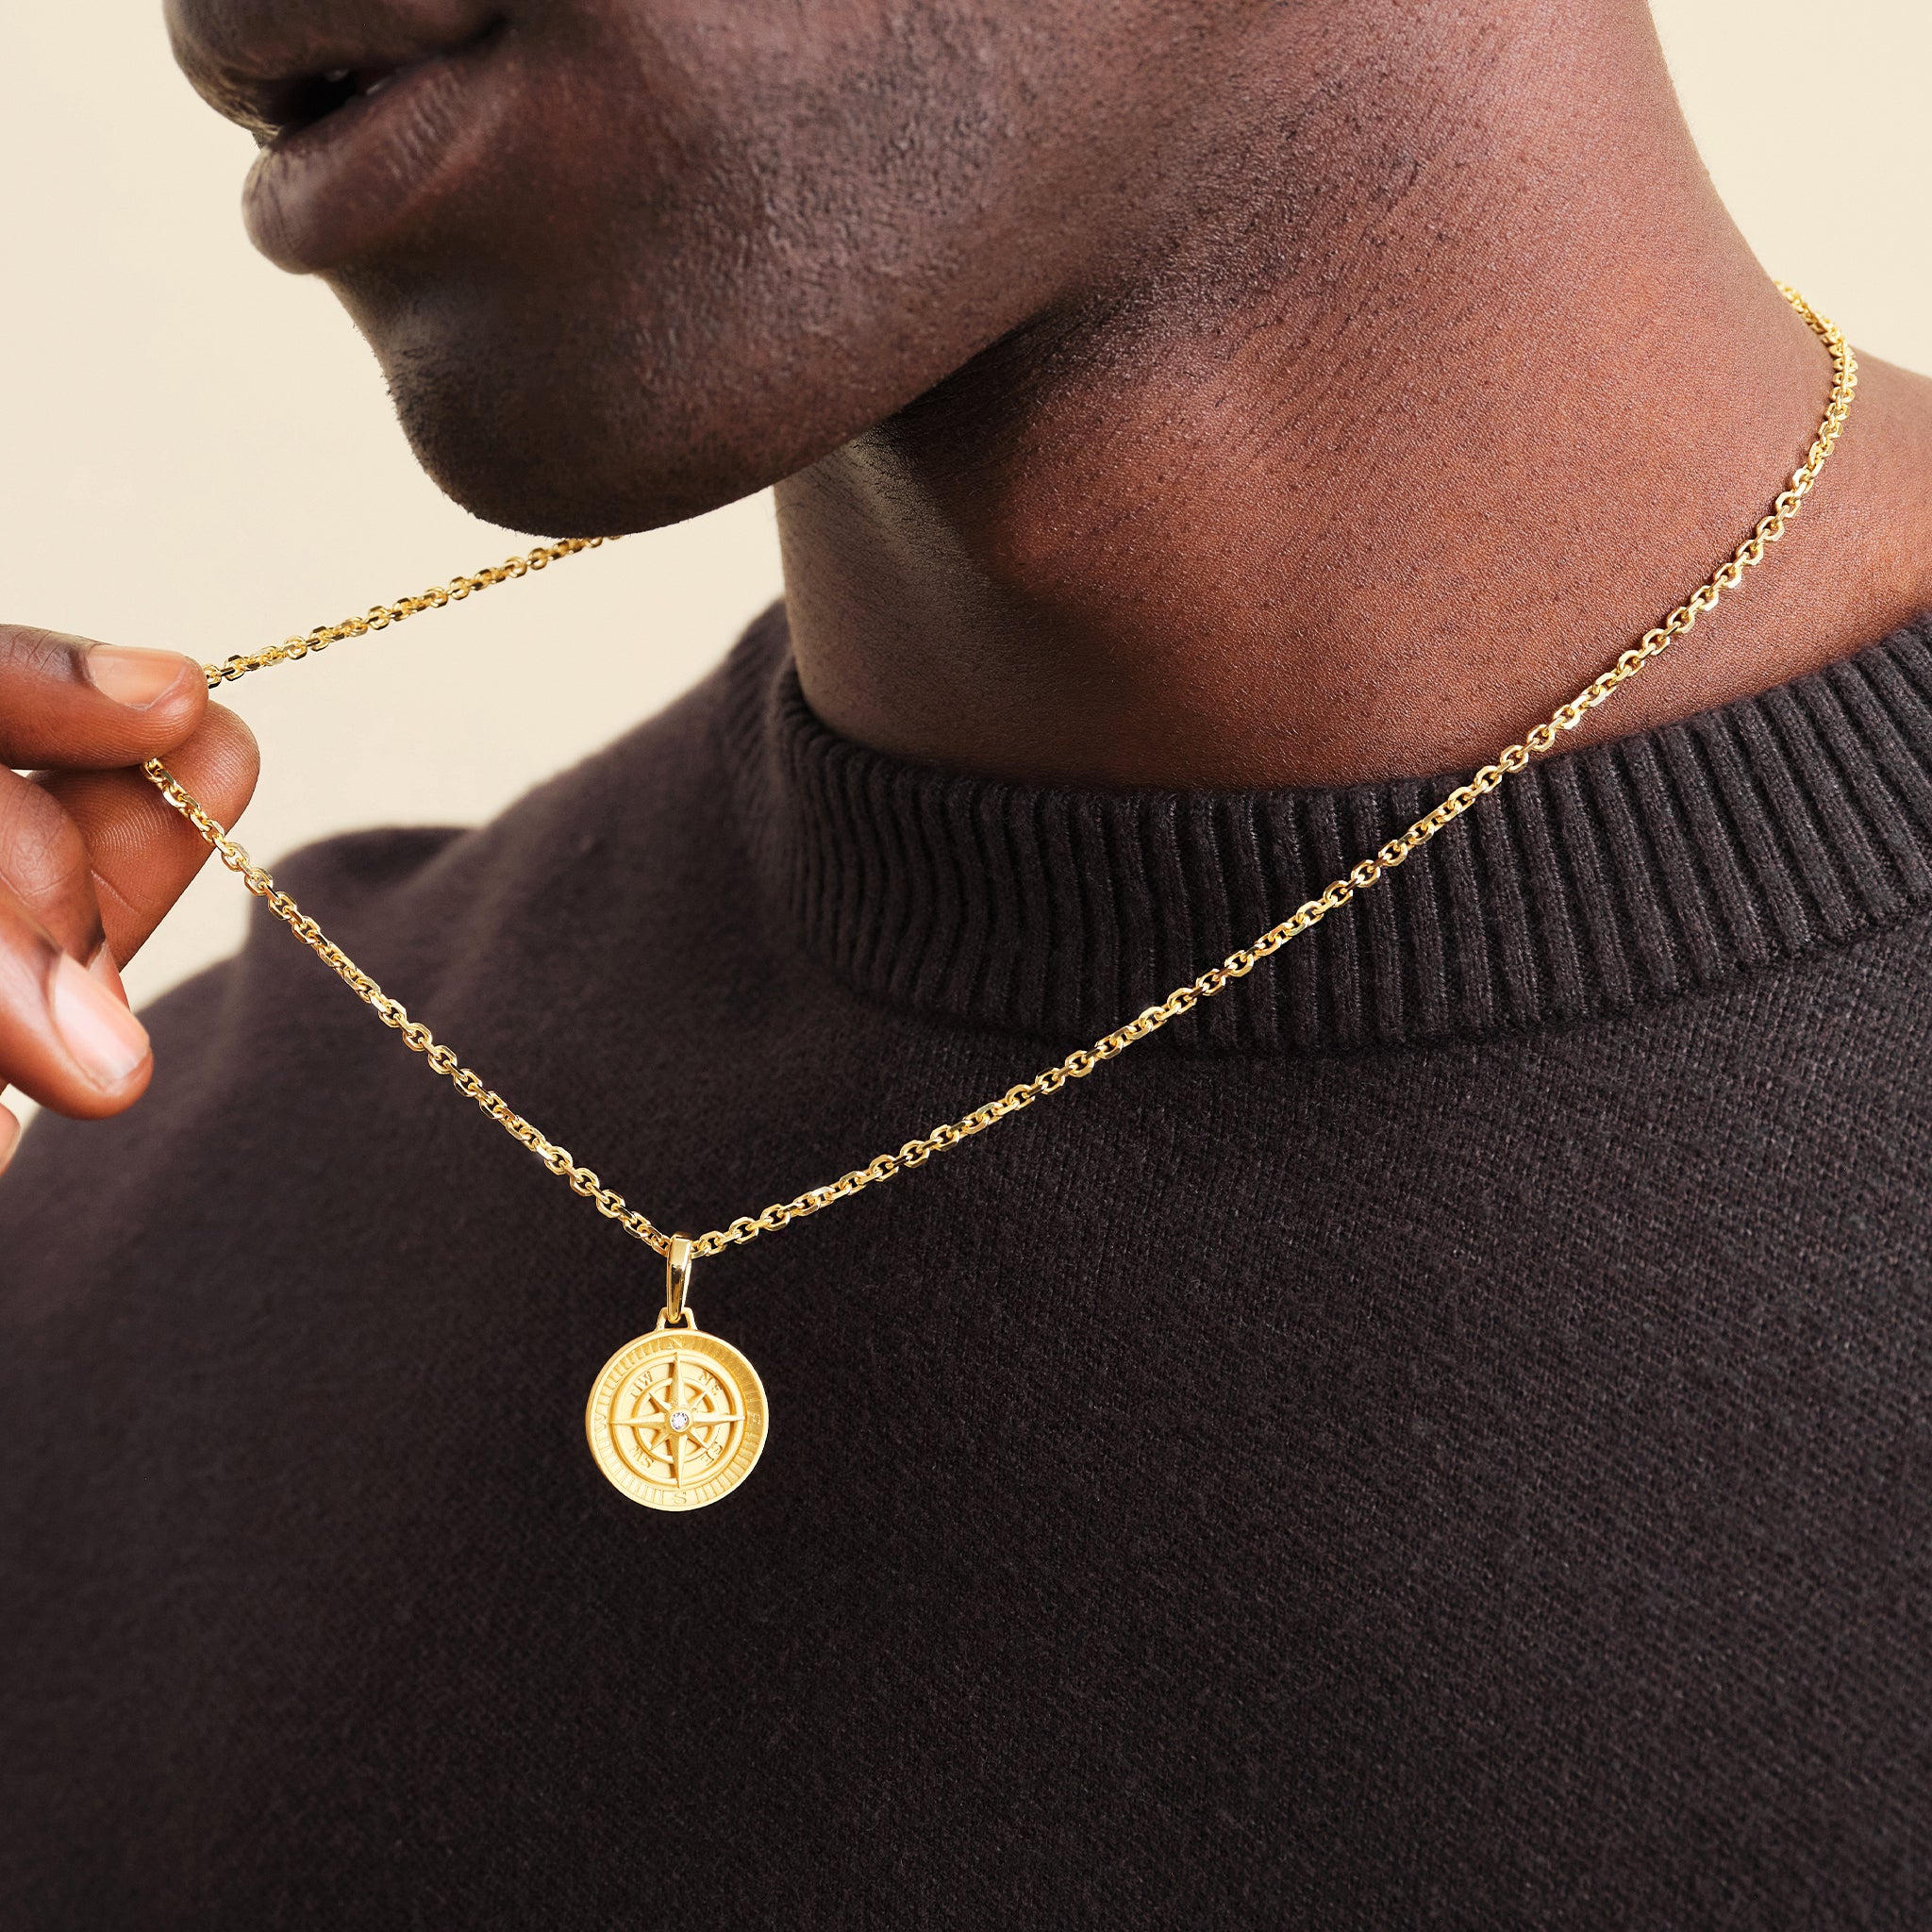 The Gold Gods Men's Micro Compass Pendant Necklace